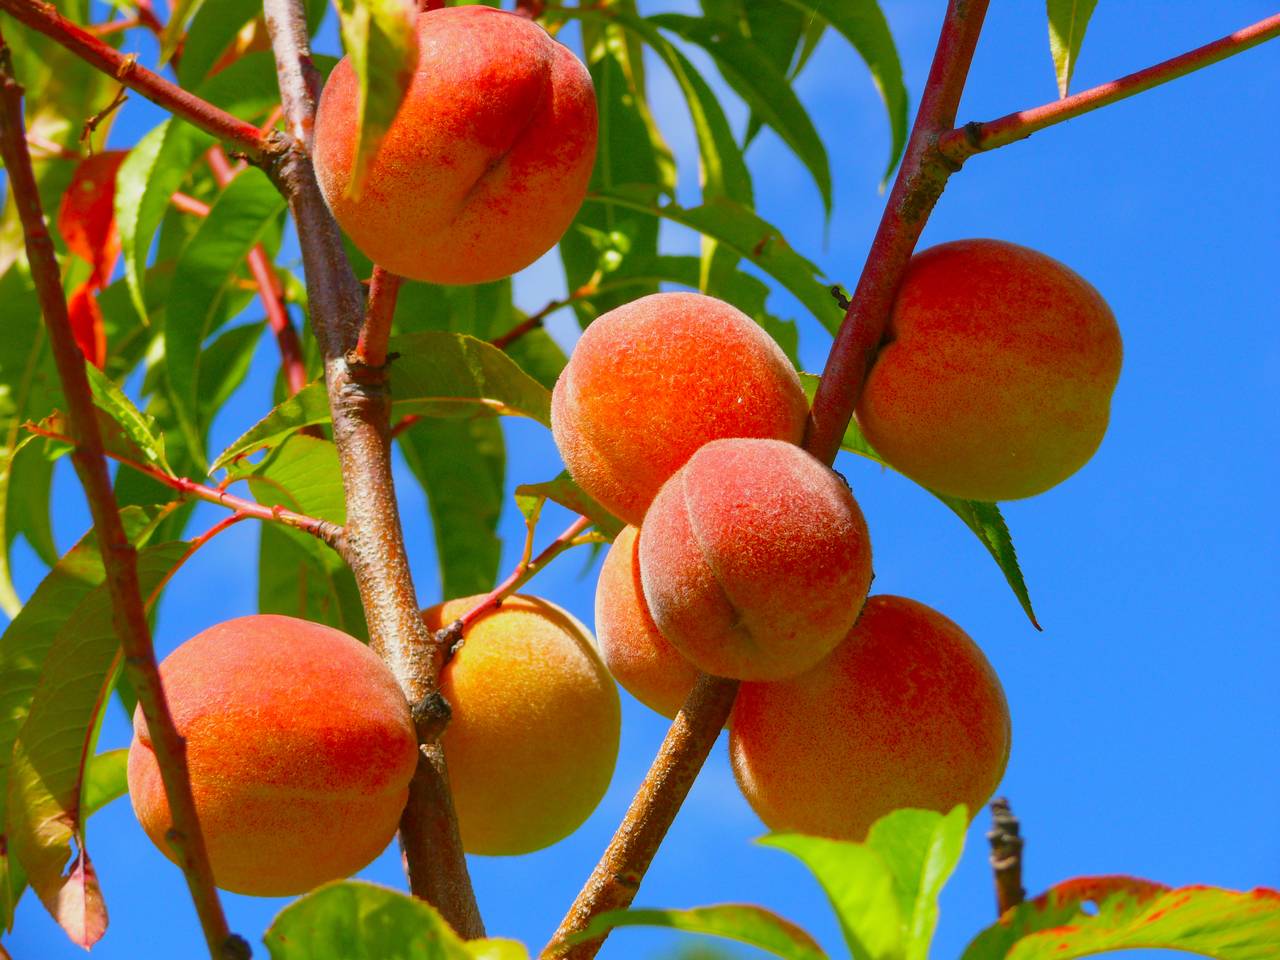 Peach, Fruit, Description, History, Cultivation, Uses, & Facts